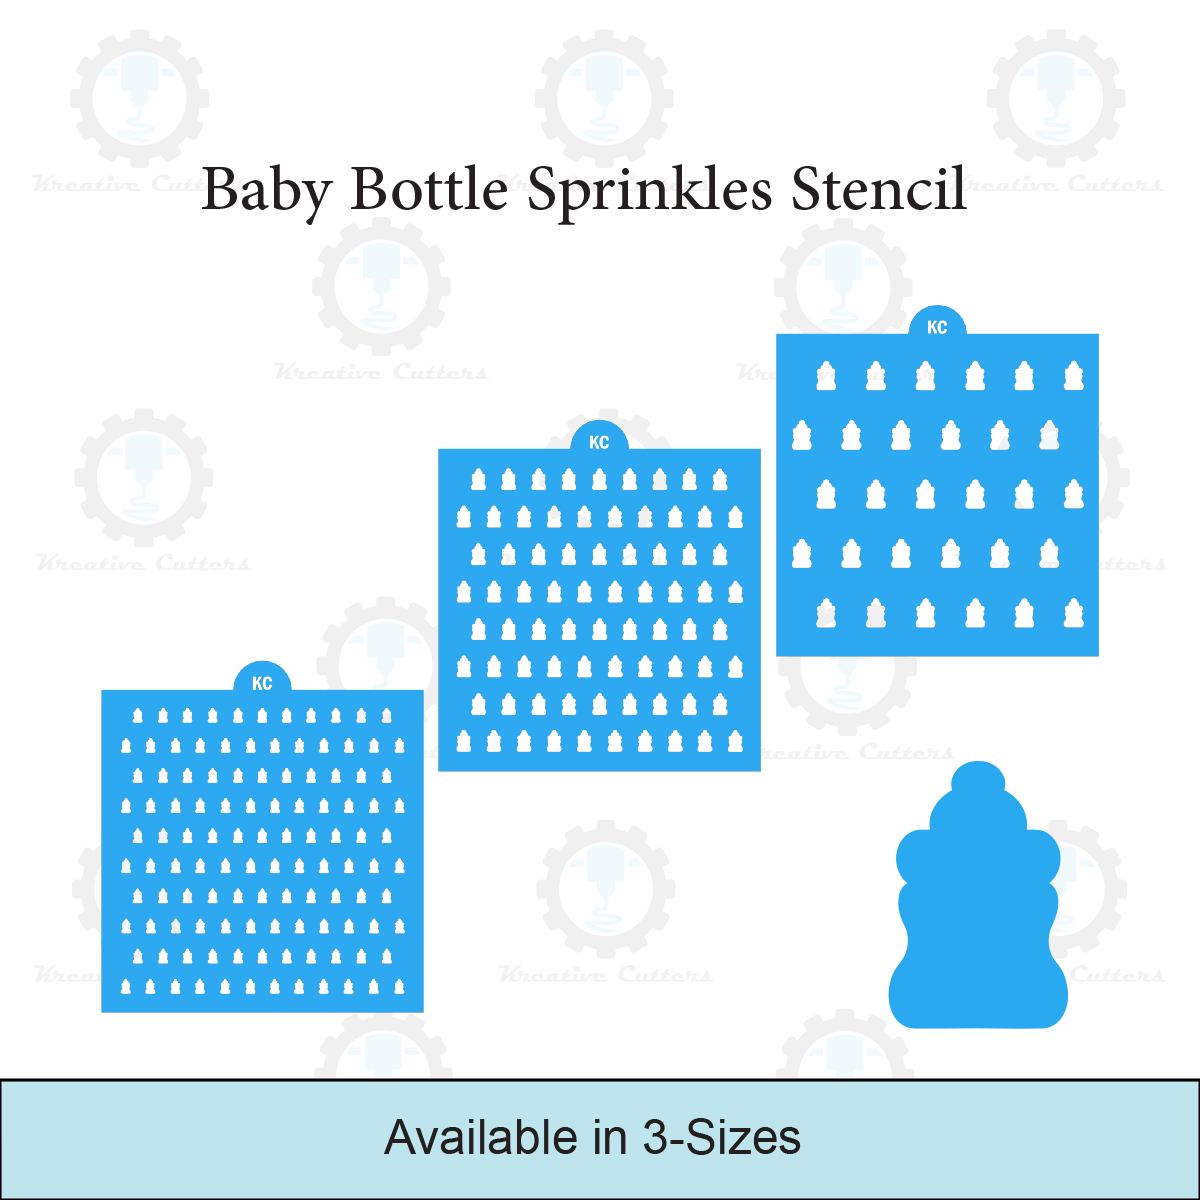 Baby Bottle Sprinkles Stencil | 3D Printed, Cookie, Cake, & Cupcake, Decorating Stencils